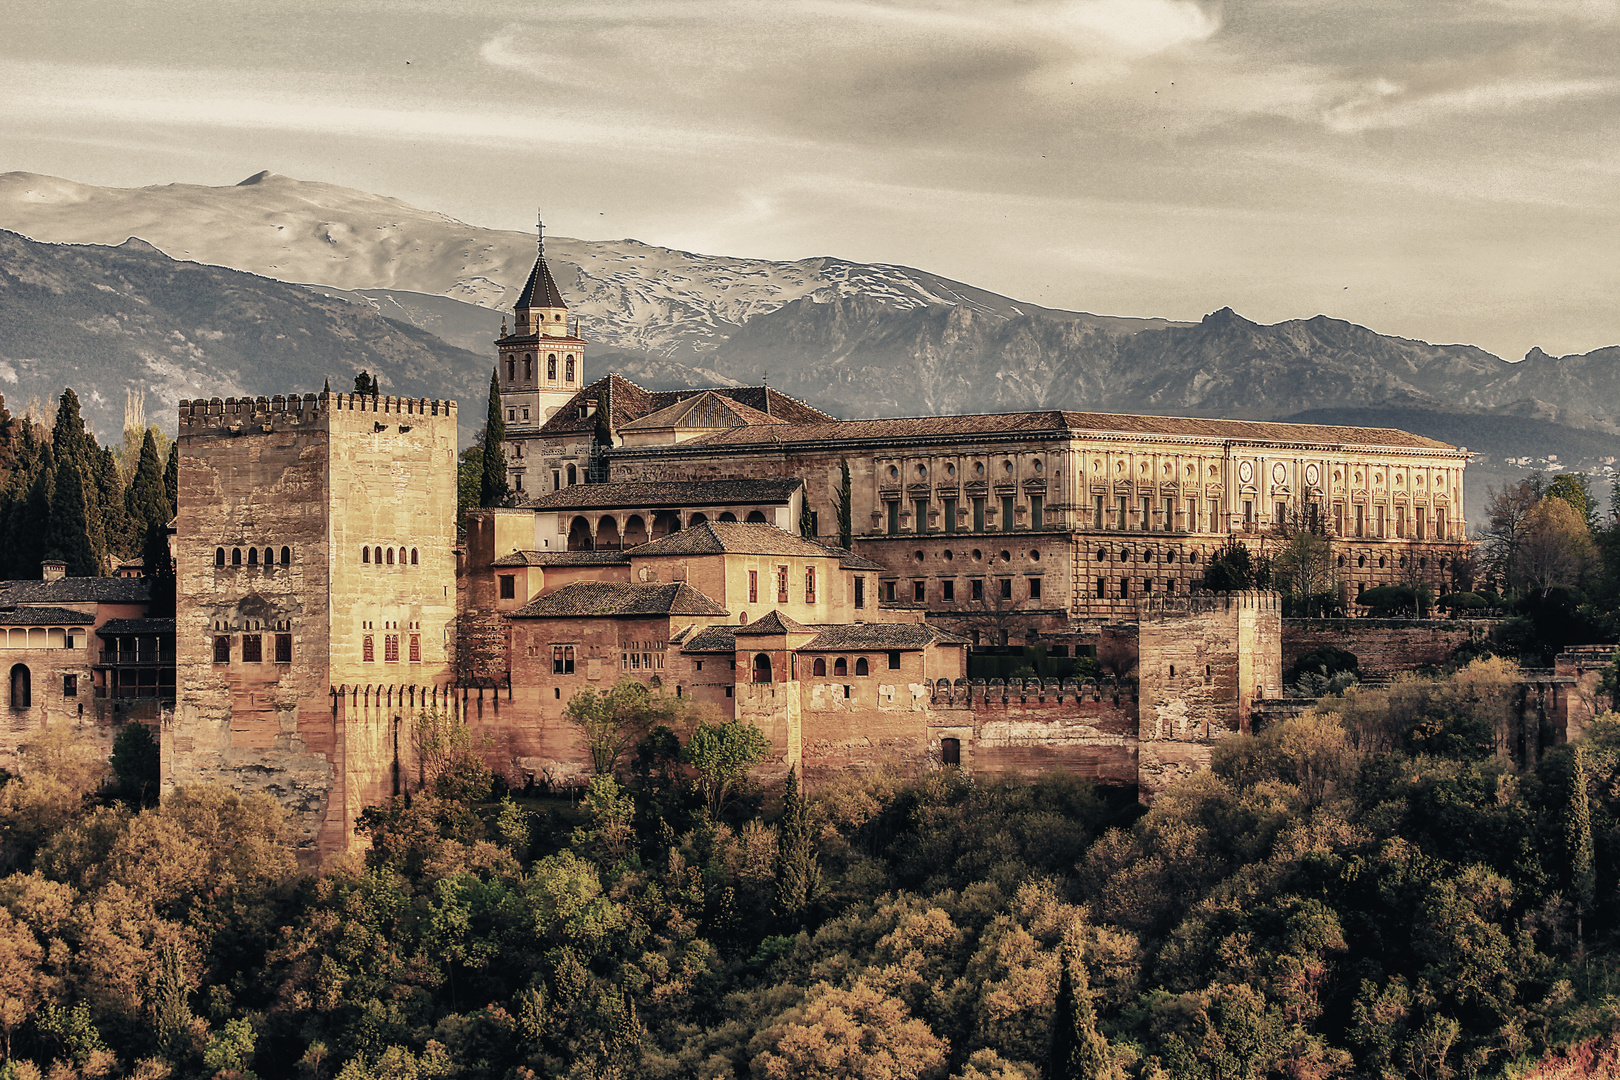 Alhambra/Granada